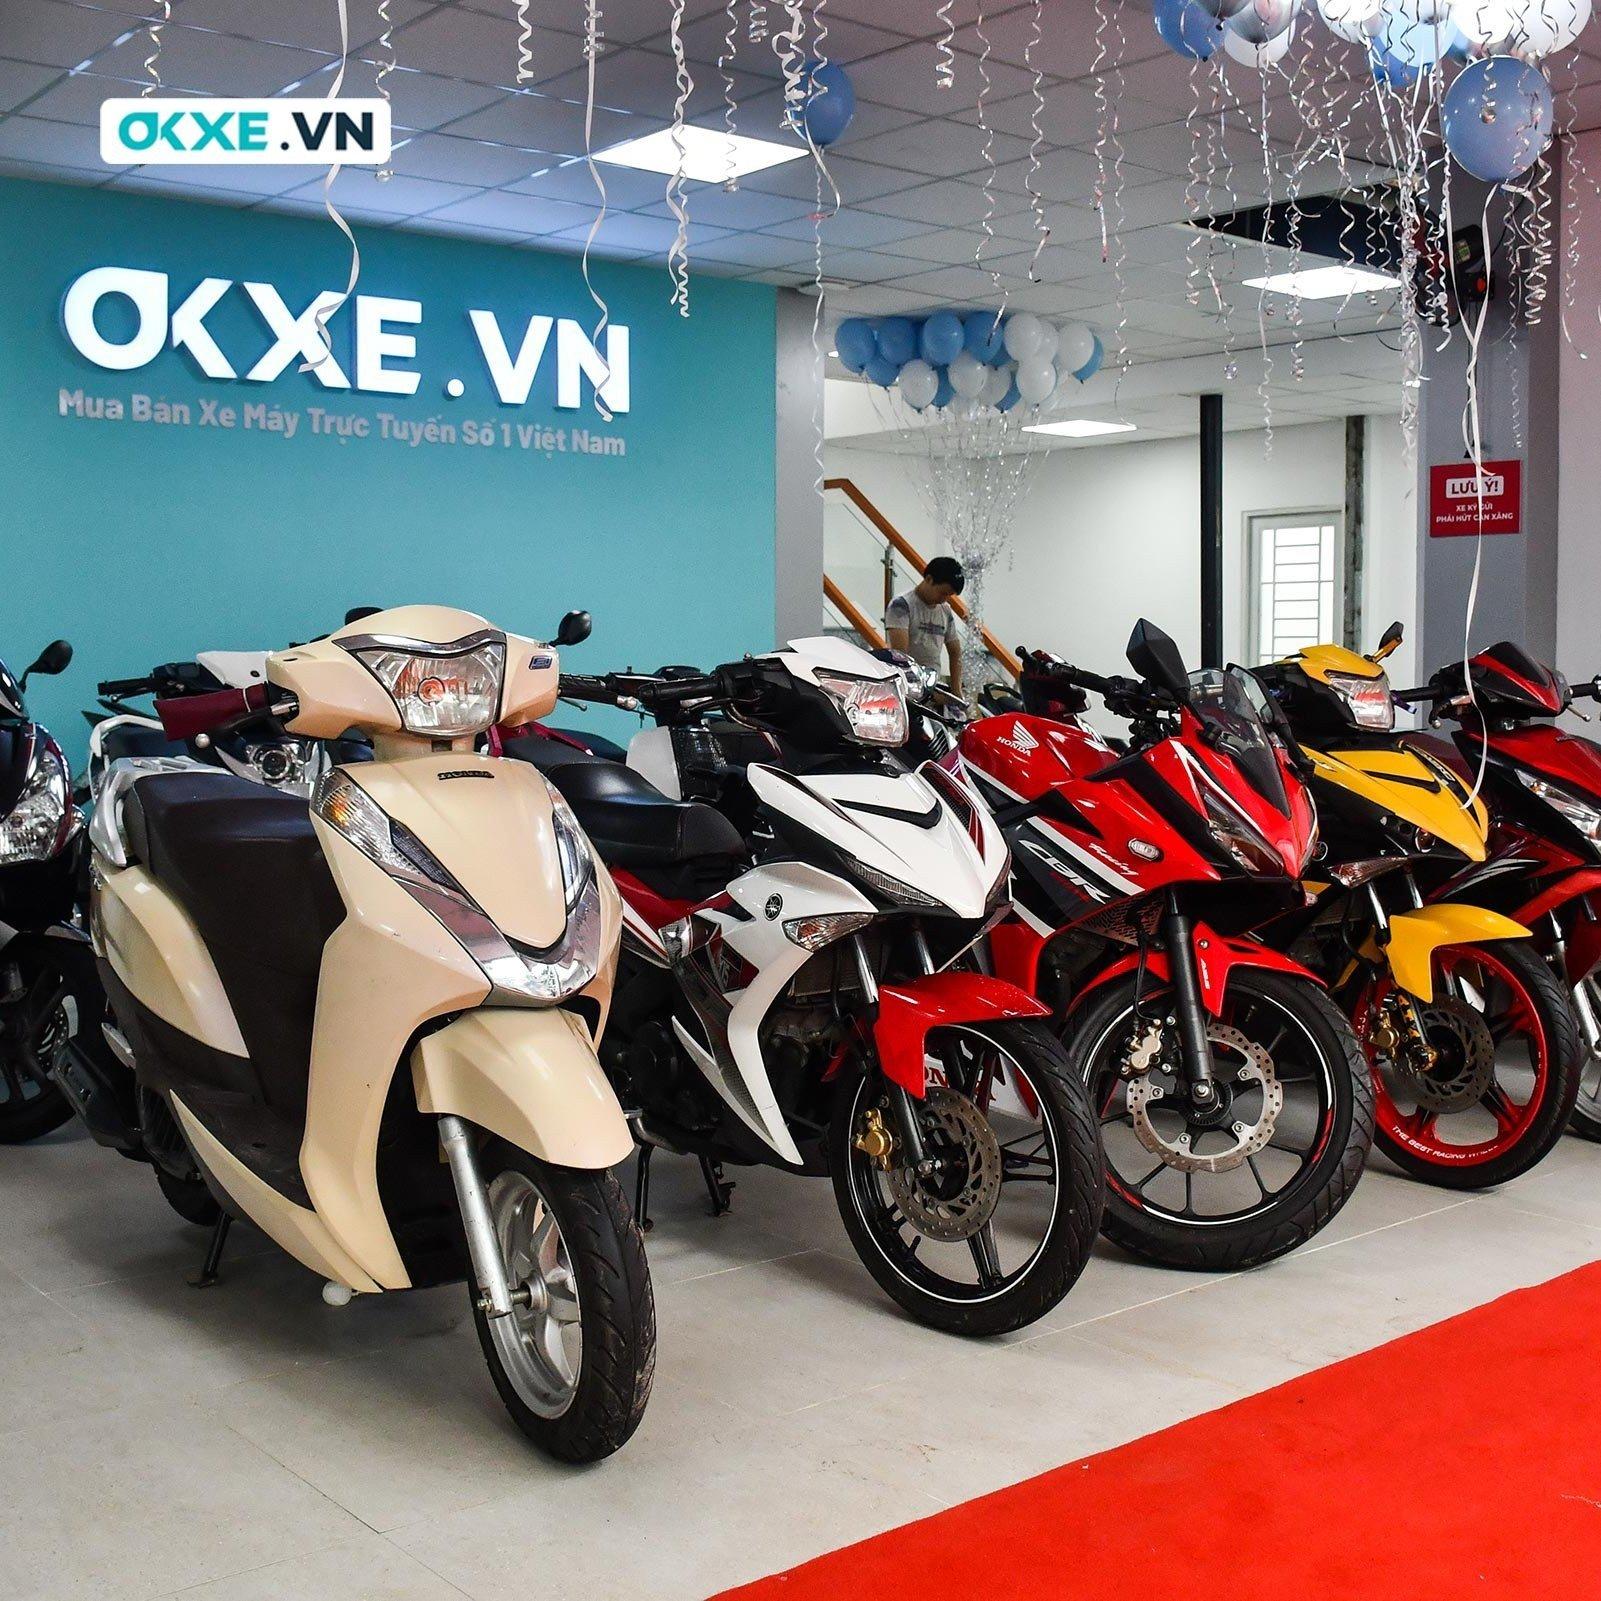 Okxe Viet Nam Company Limited